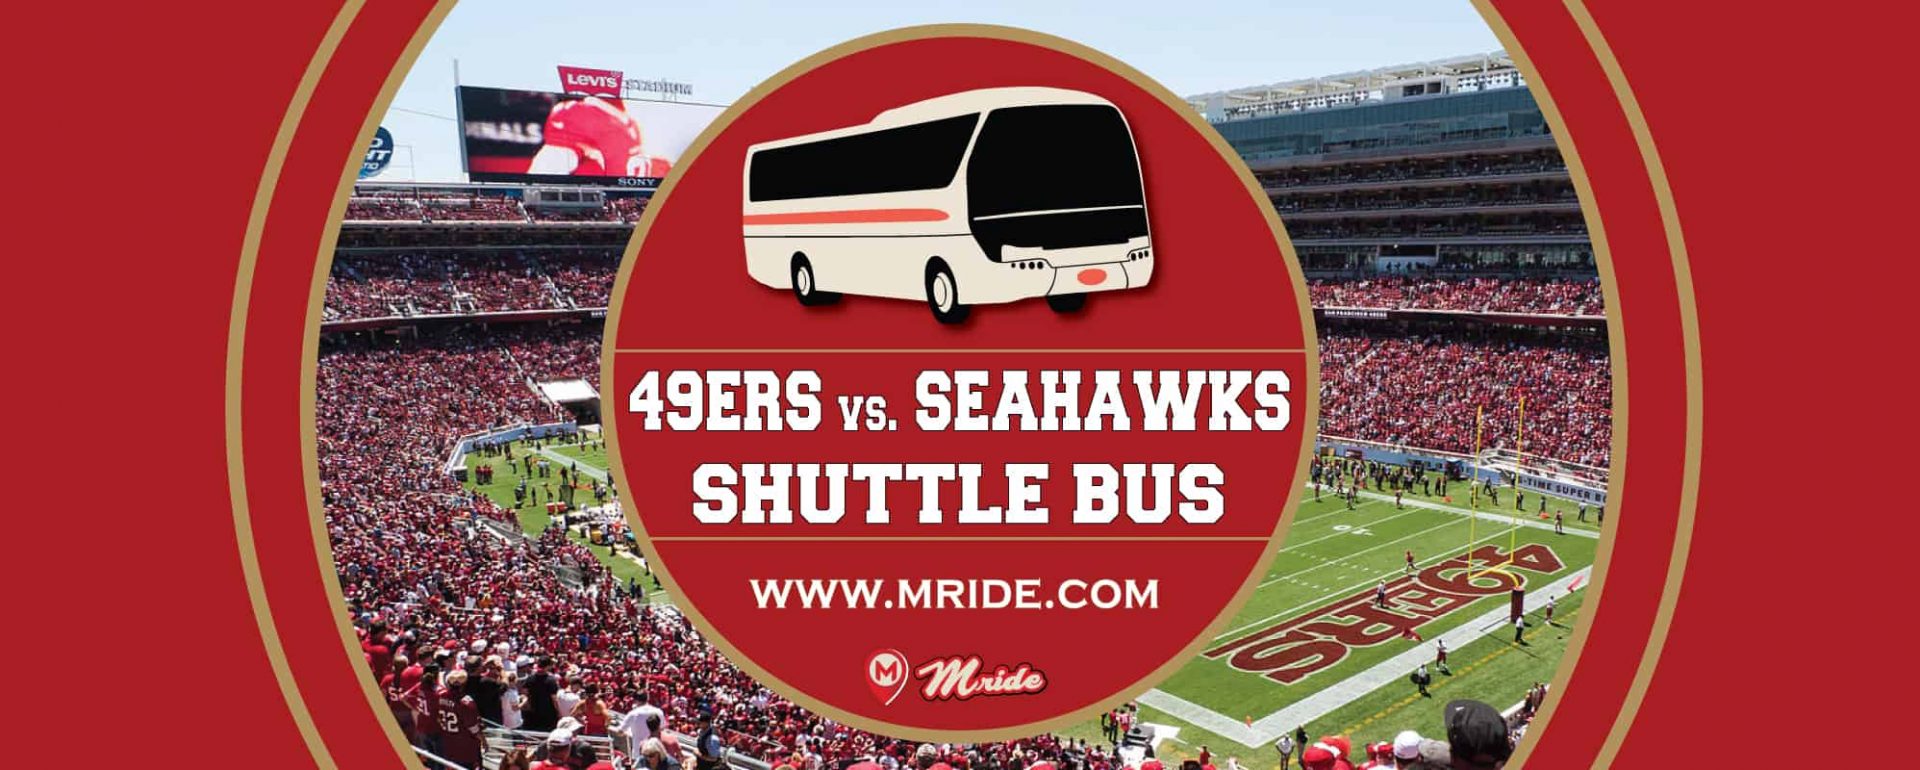 Levis-Stadium-Shuttle-Bus-49ers-vs-Seahawks-Tickets